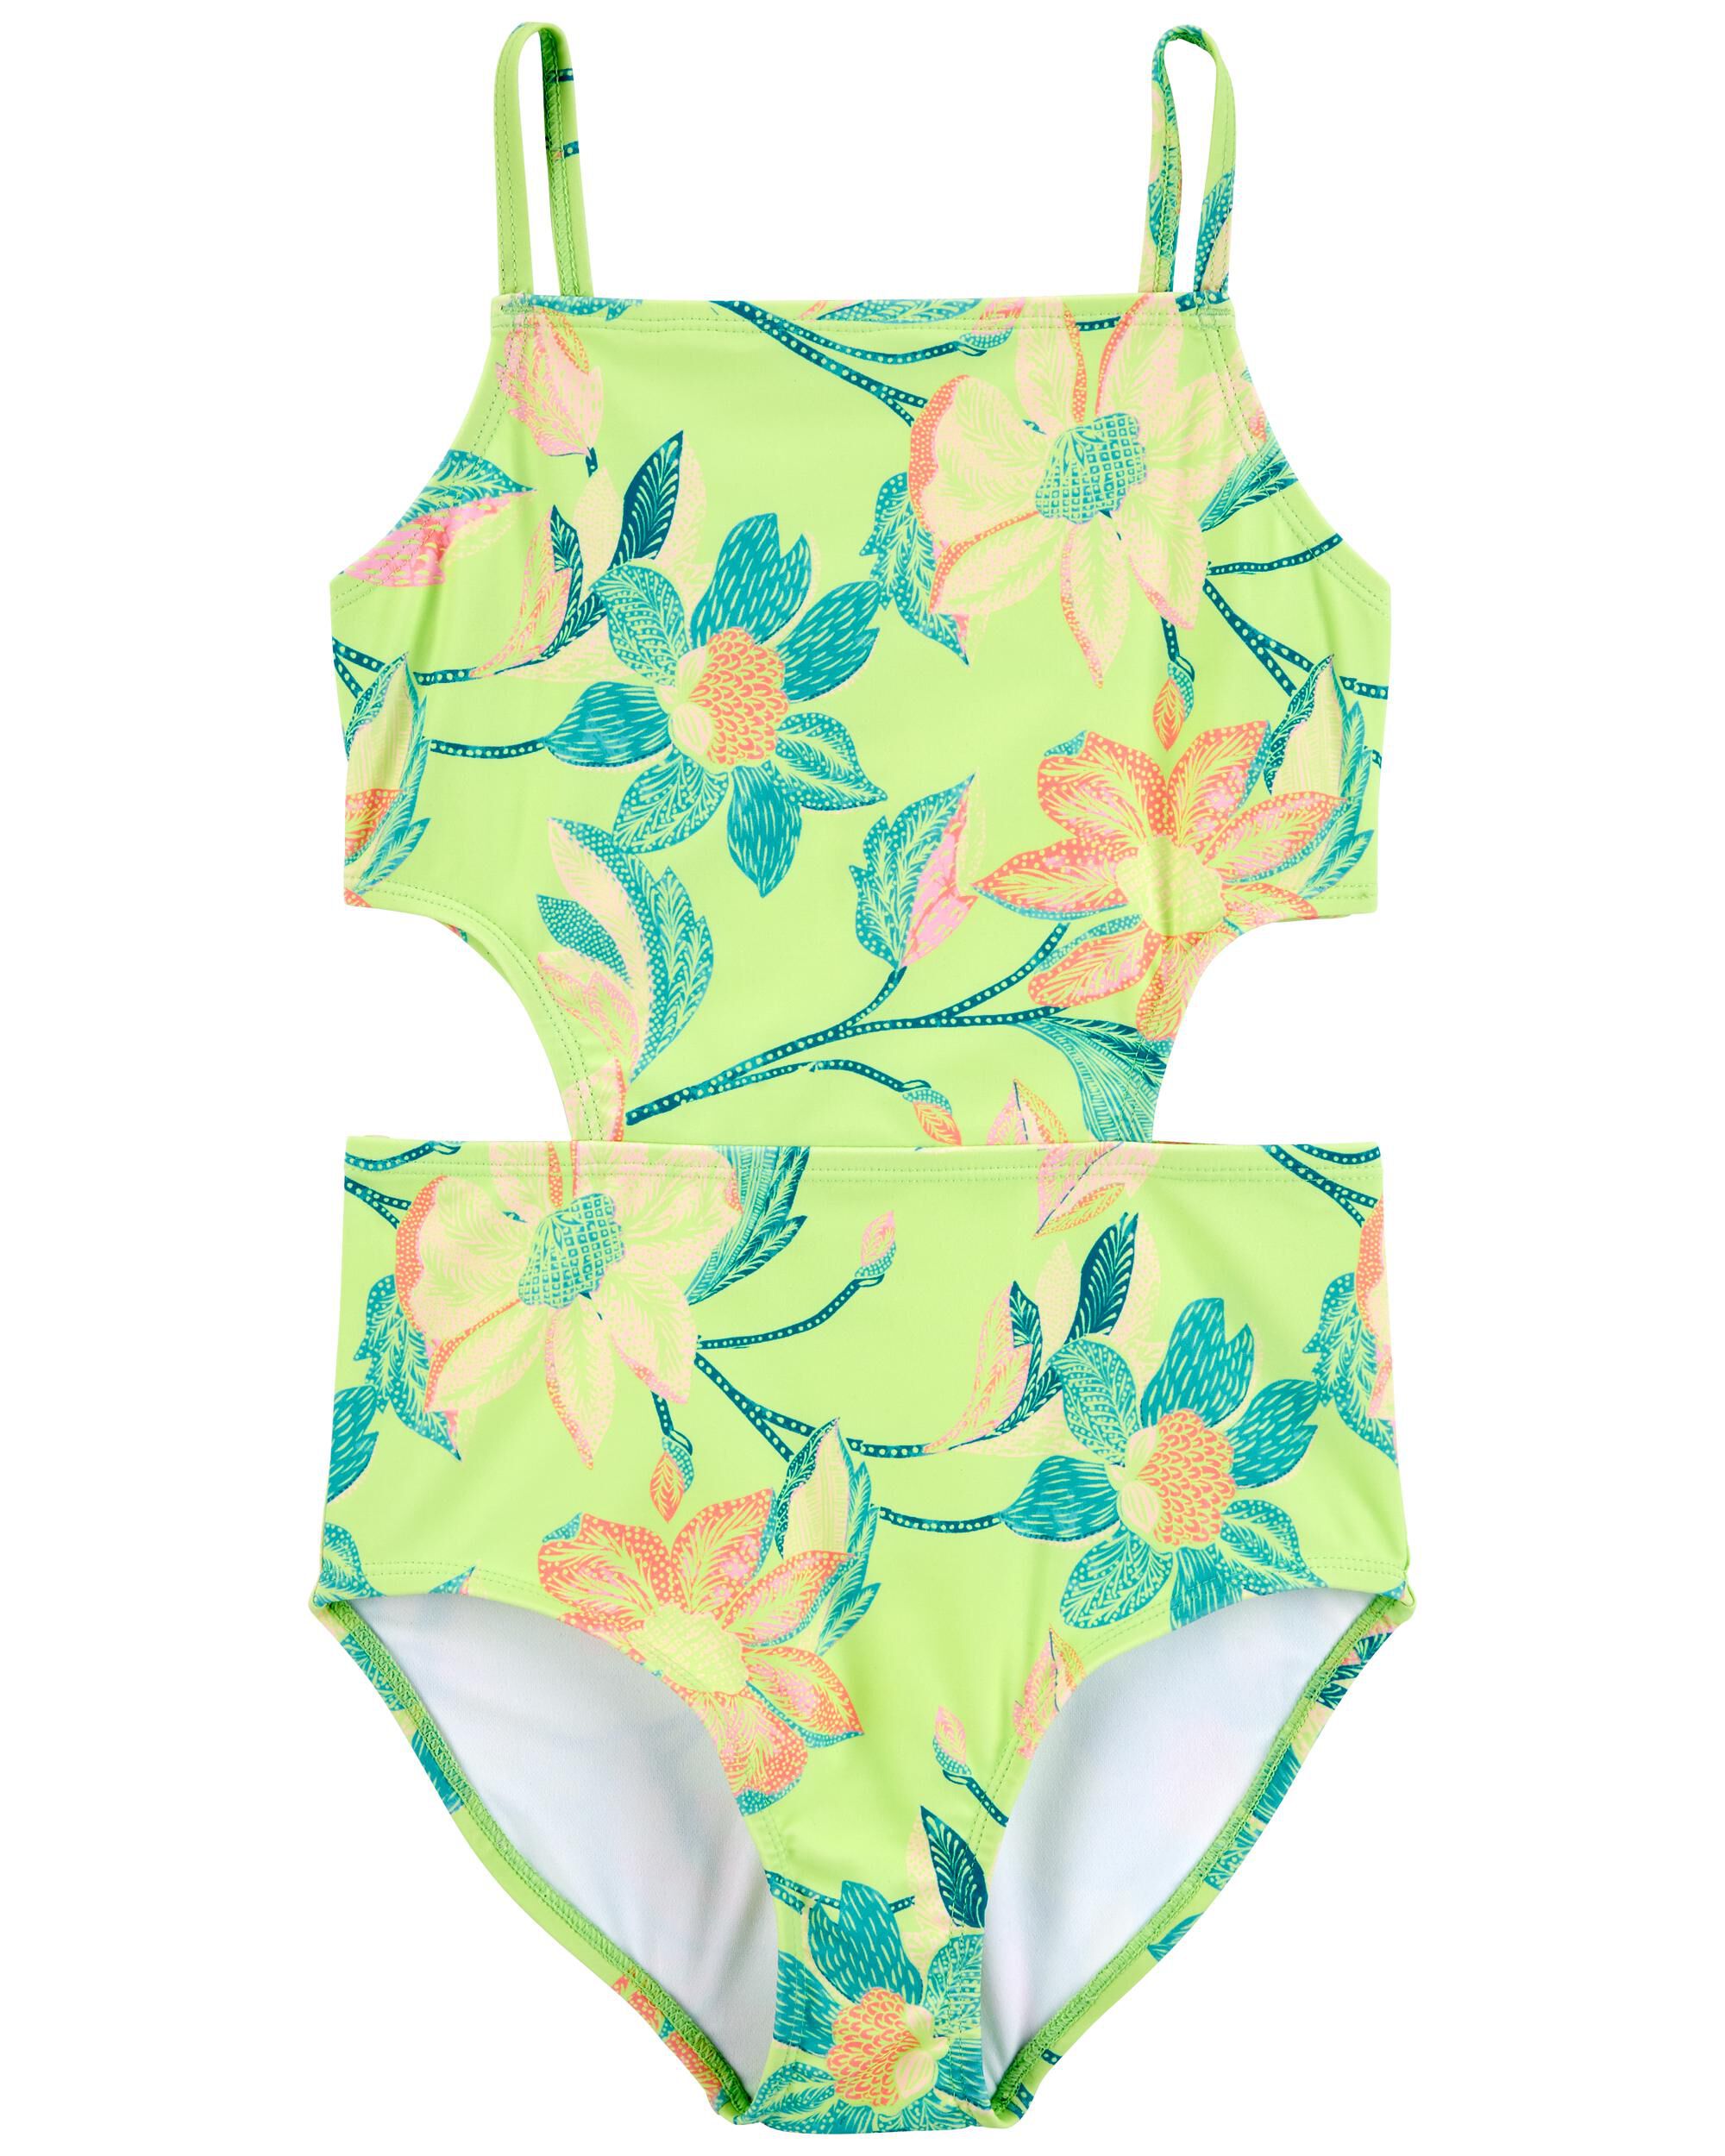 OshKosh Navy Heart Print Ruffle One-Piece Swimsuit Toddler Girls 2T,3T,4T 